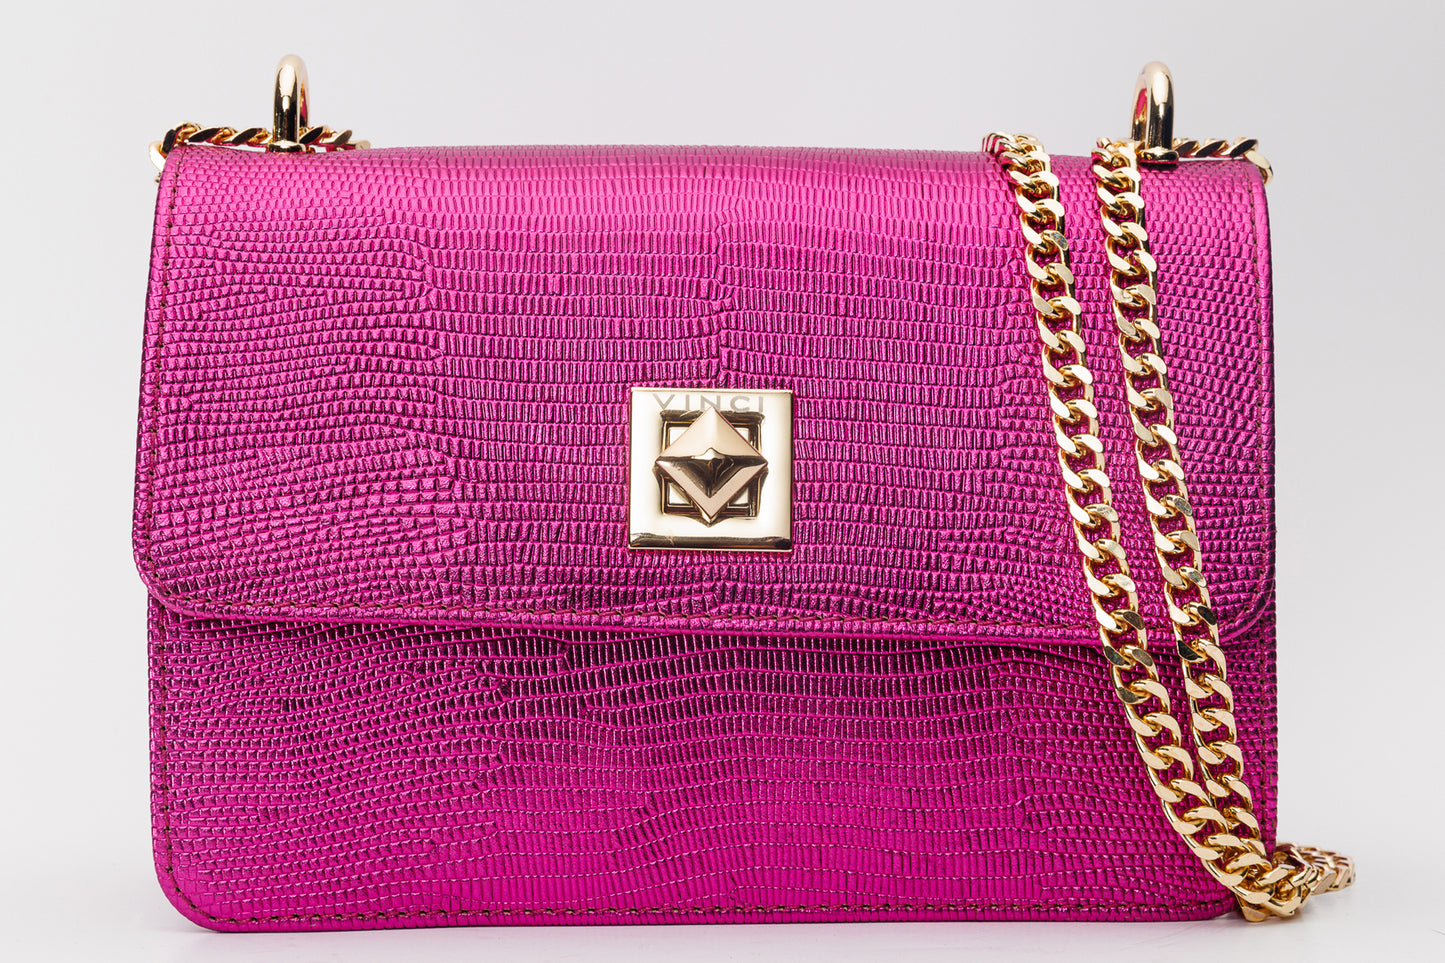 The Maple Fuchsia Leather Handbag